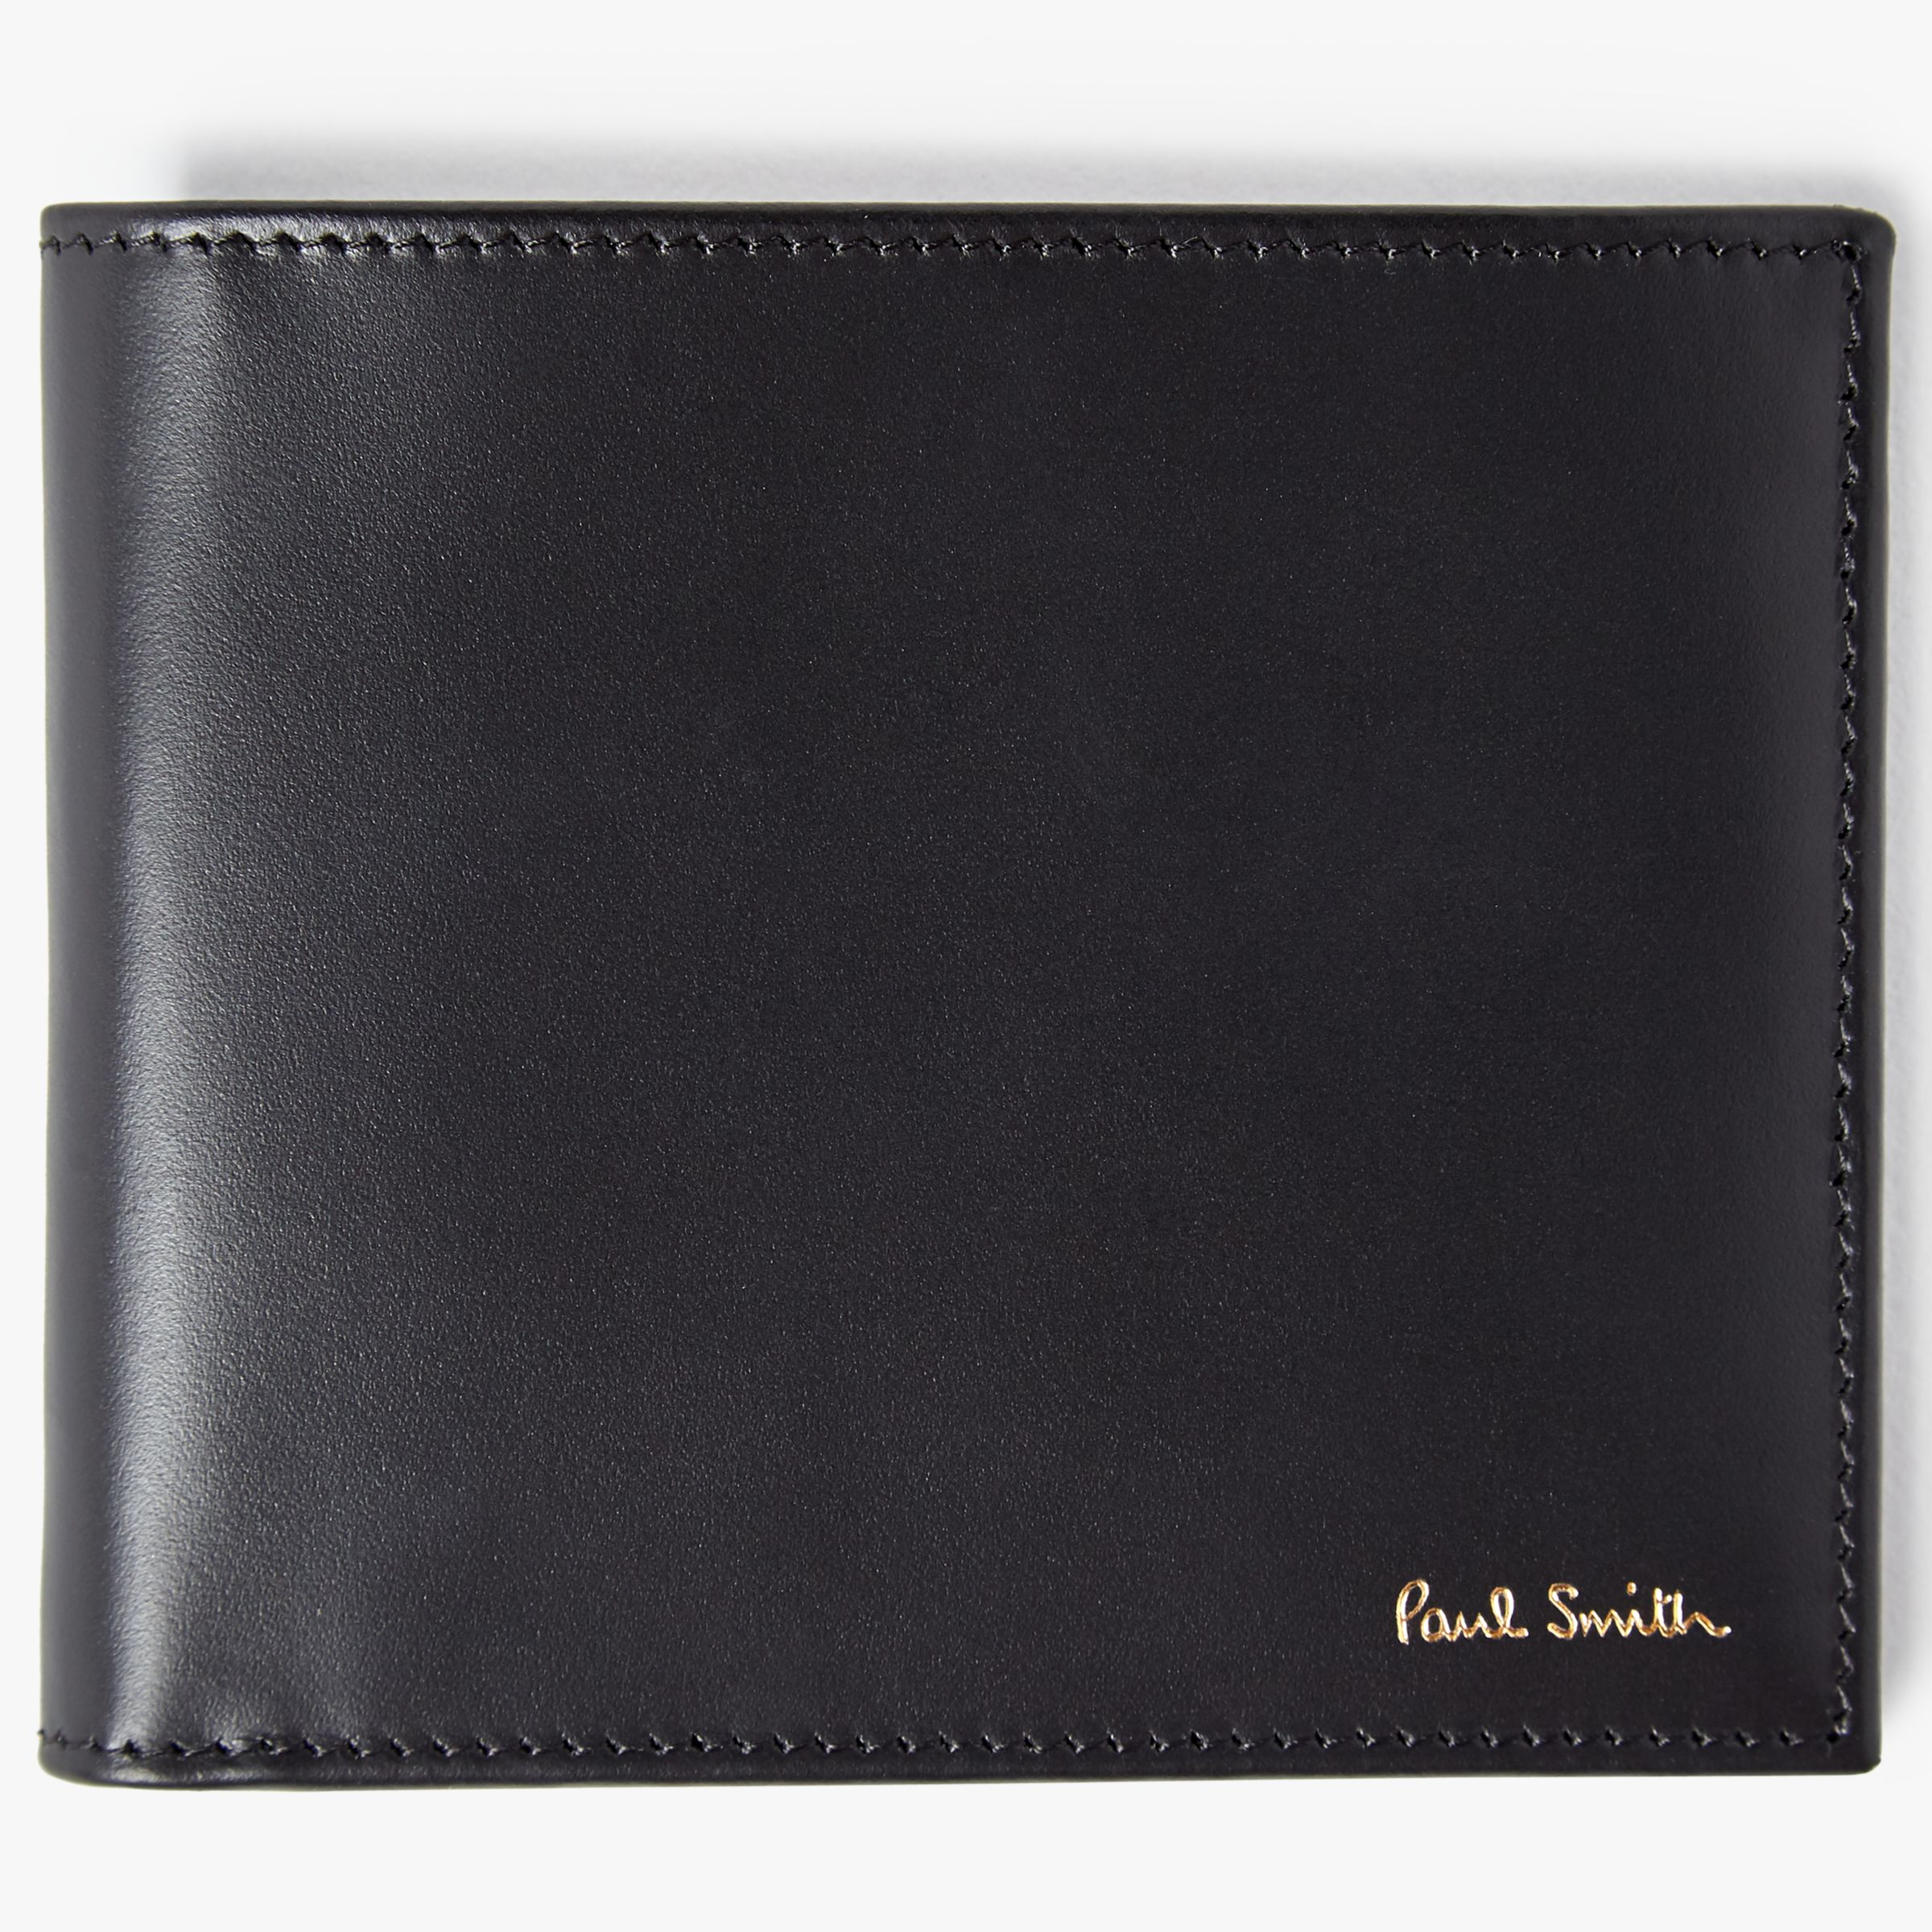 Paul Smith Interior Signature Stripe Leather Bifold Wallet, Black